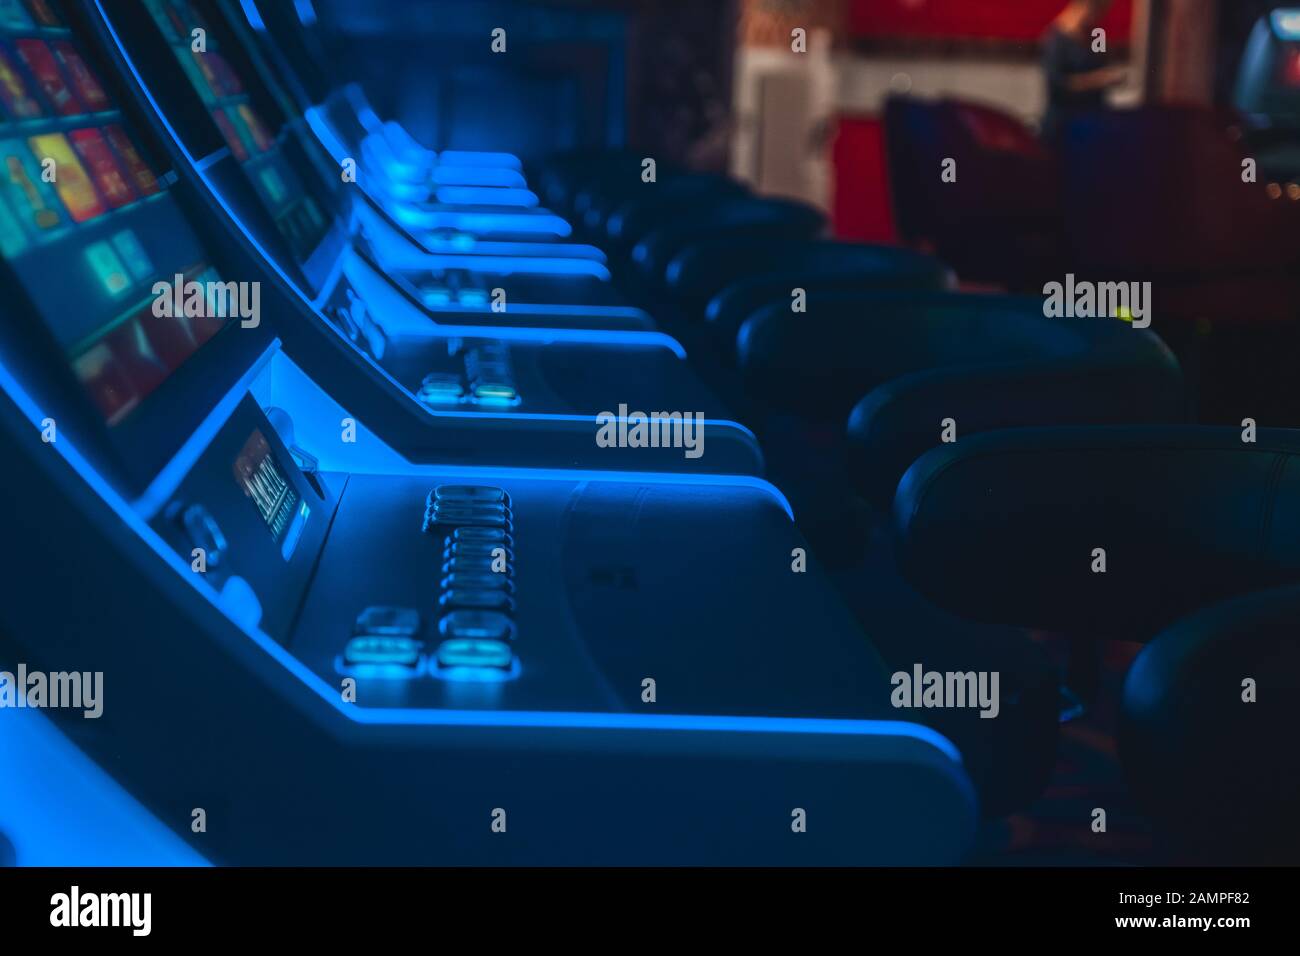 Slot machines in a casino. Stock Photo